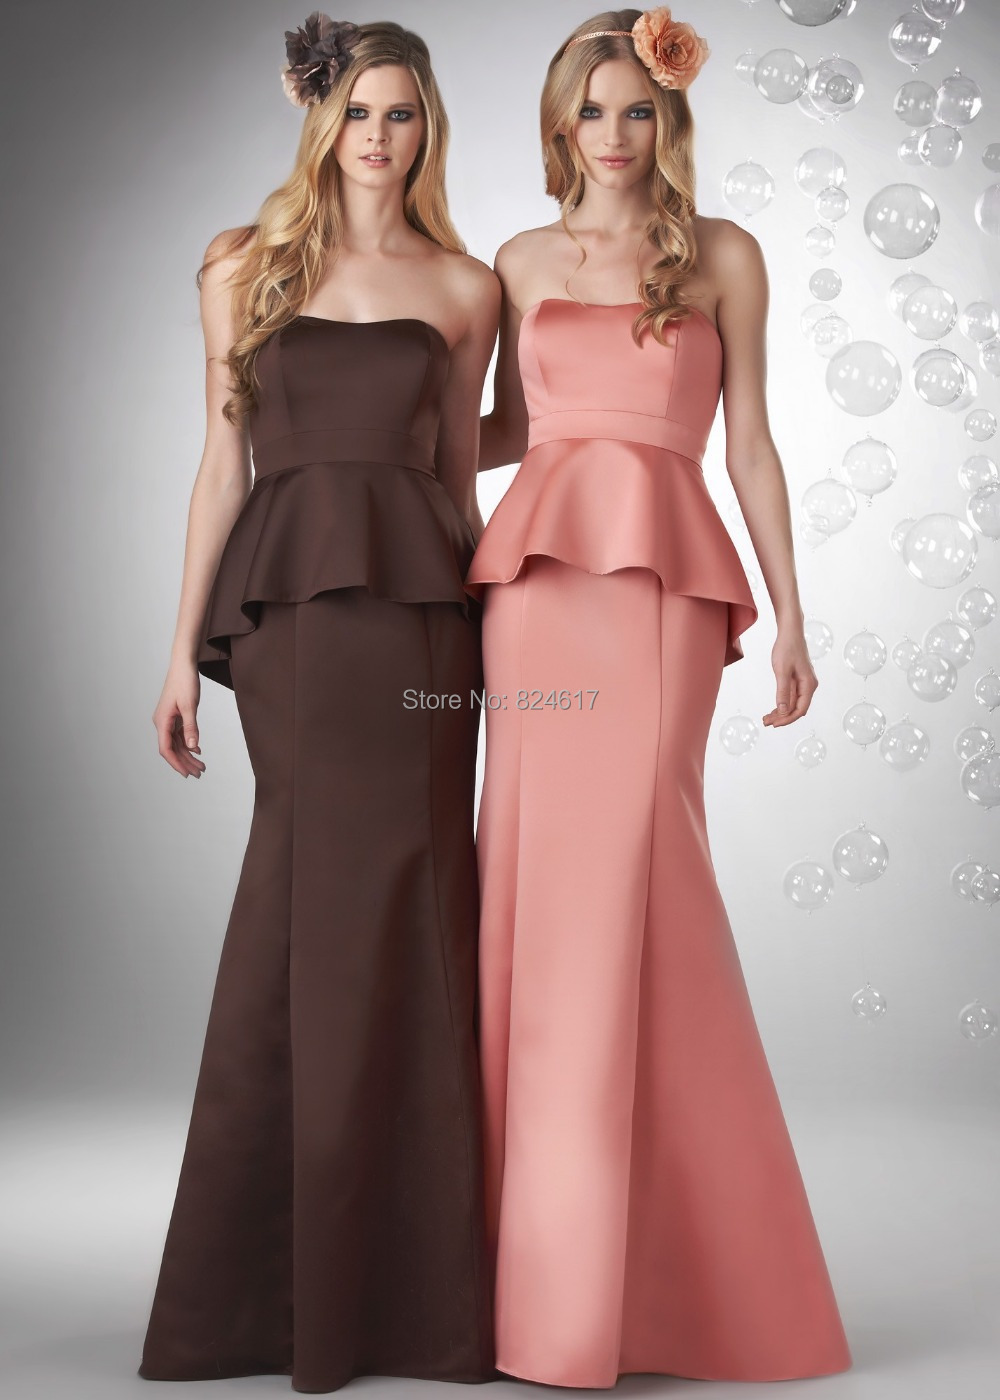 Brown And Pink Bridesmaid Dresses